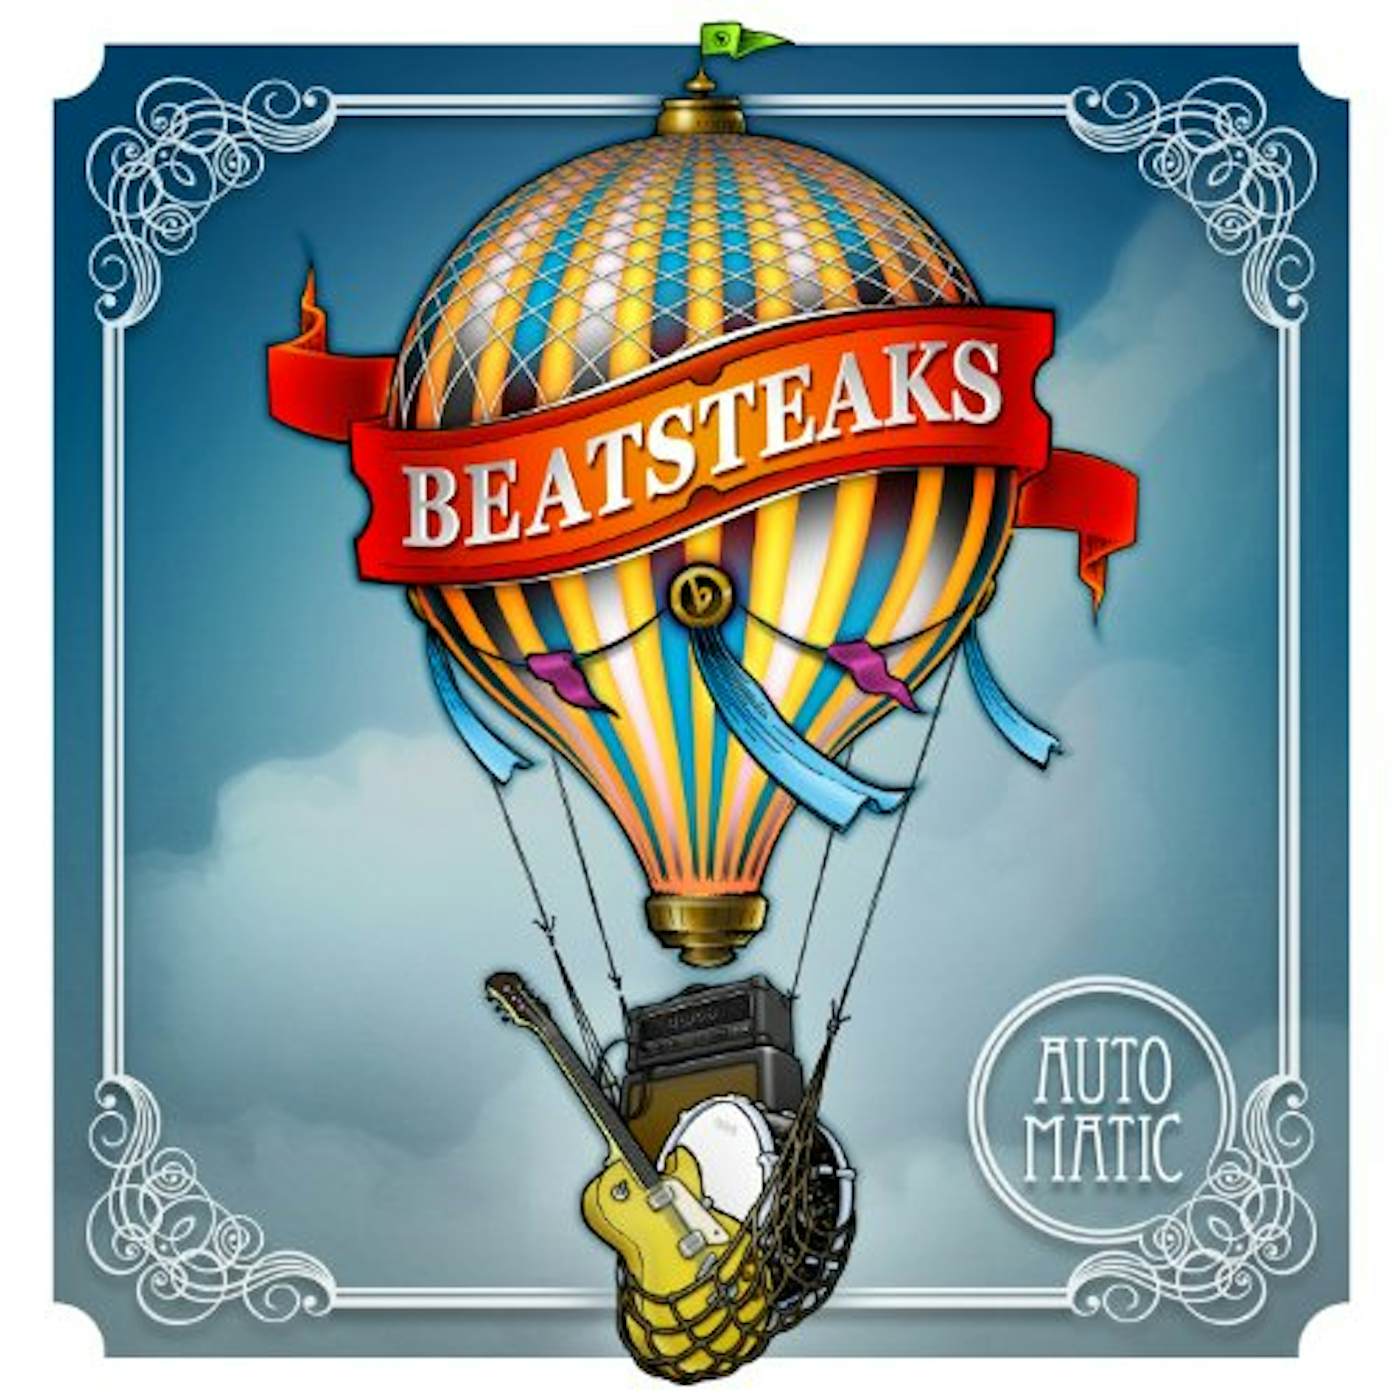 Beatsteaks Automatic Vinyl Record